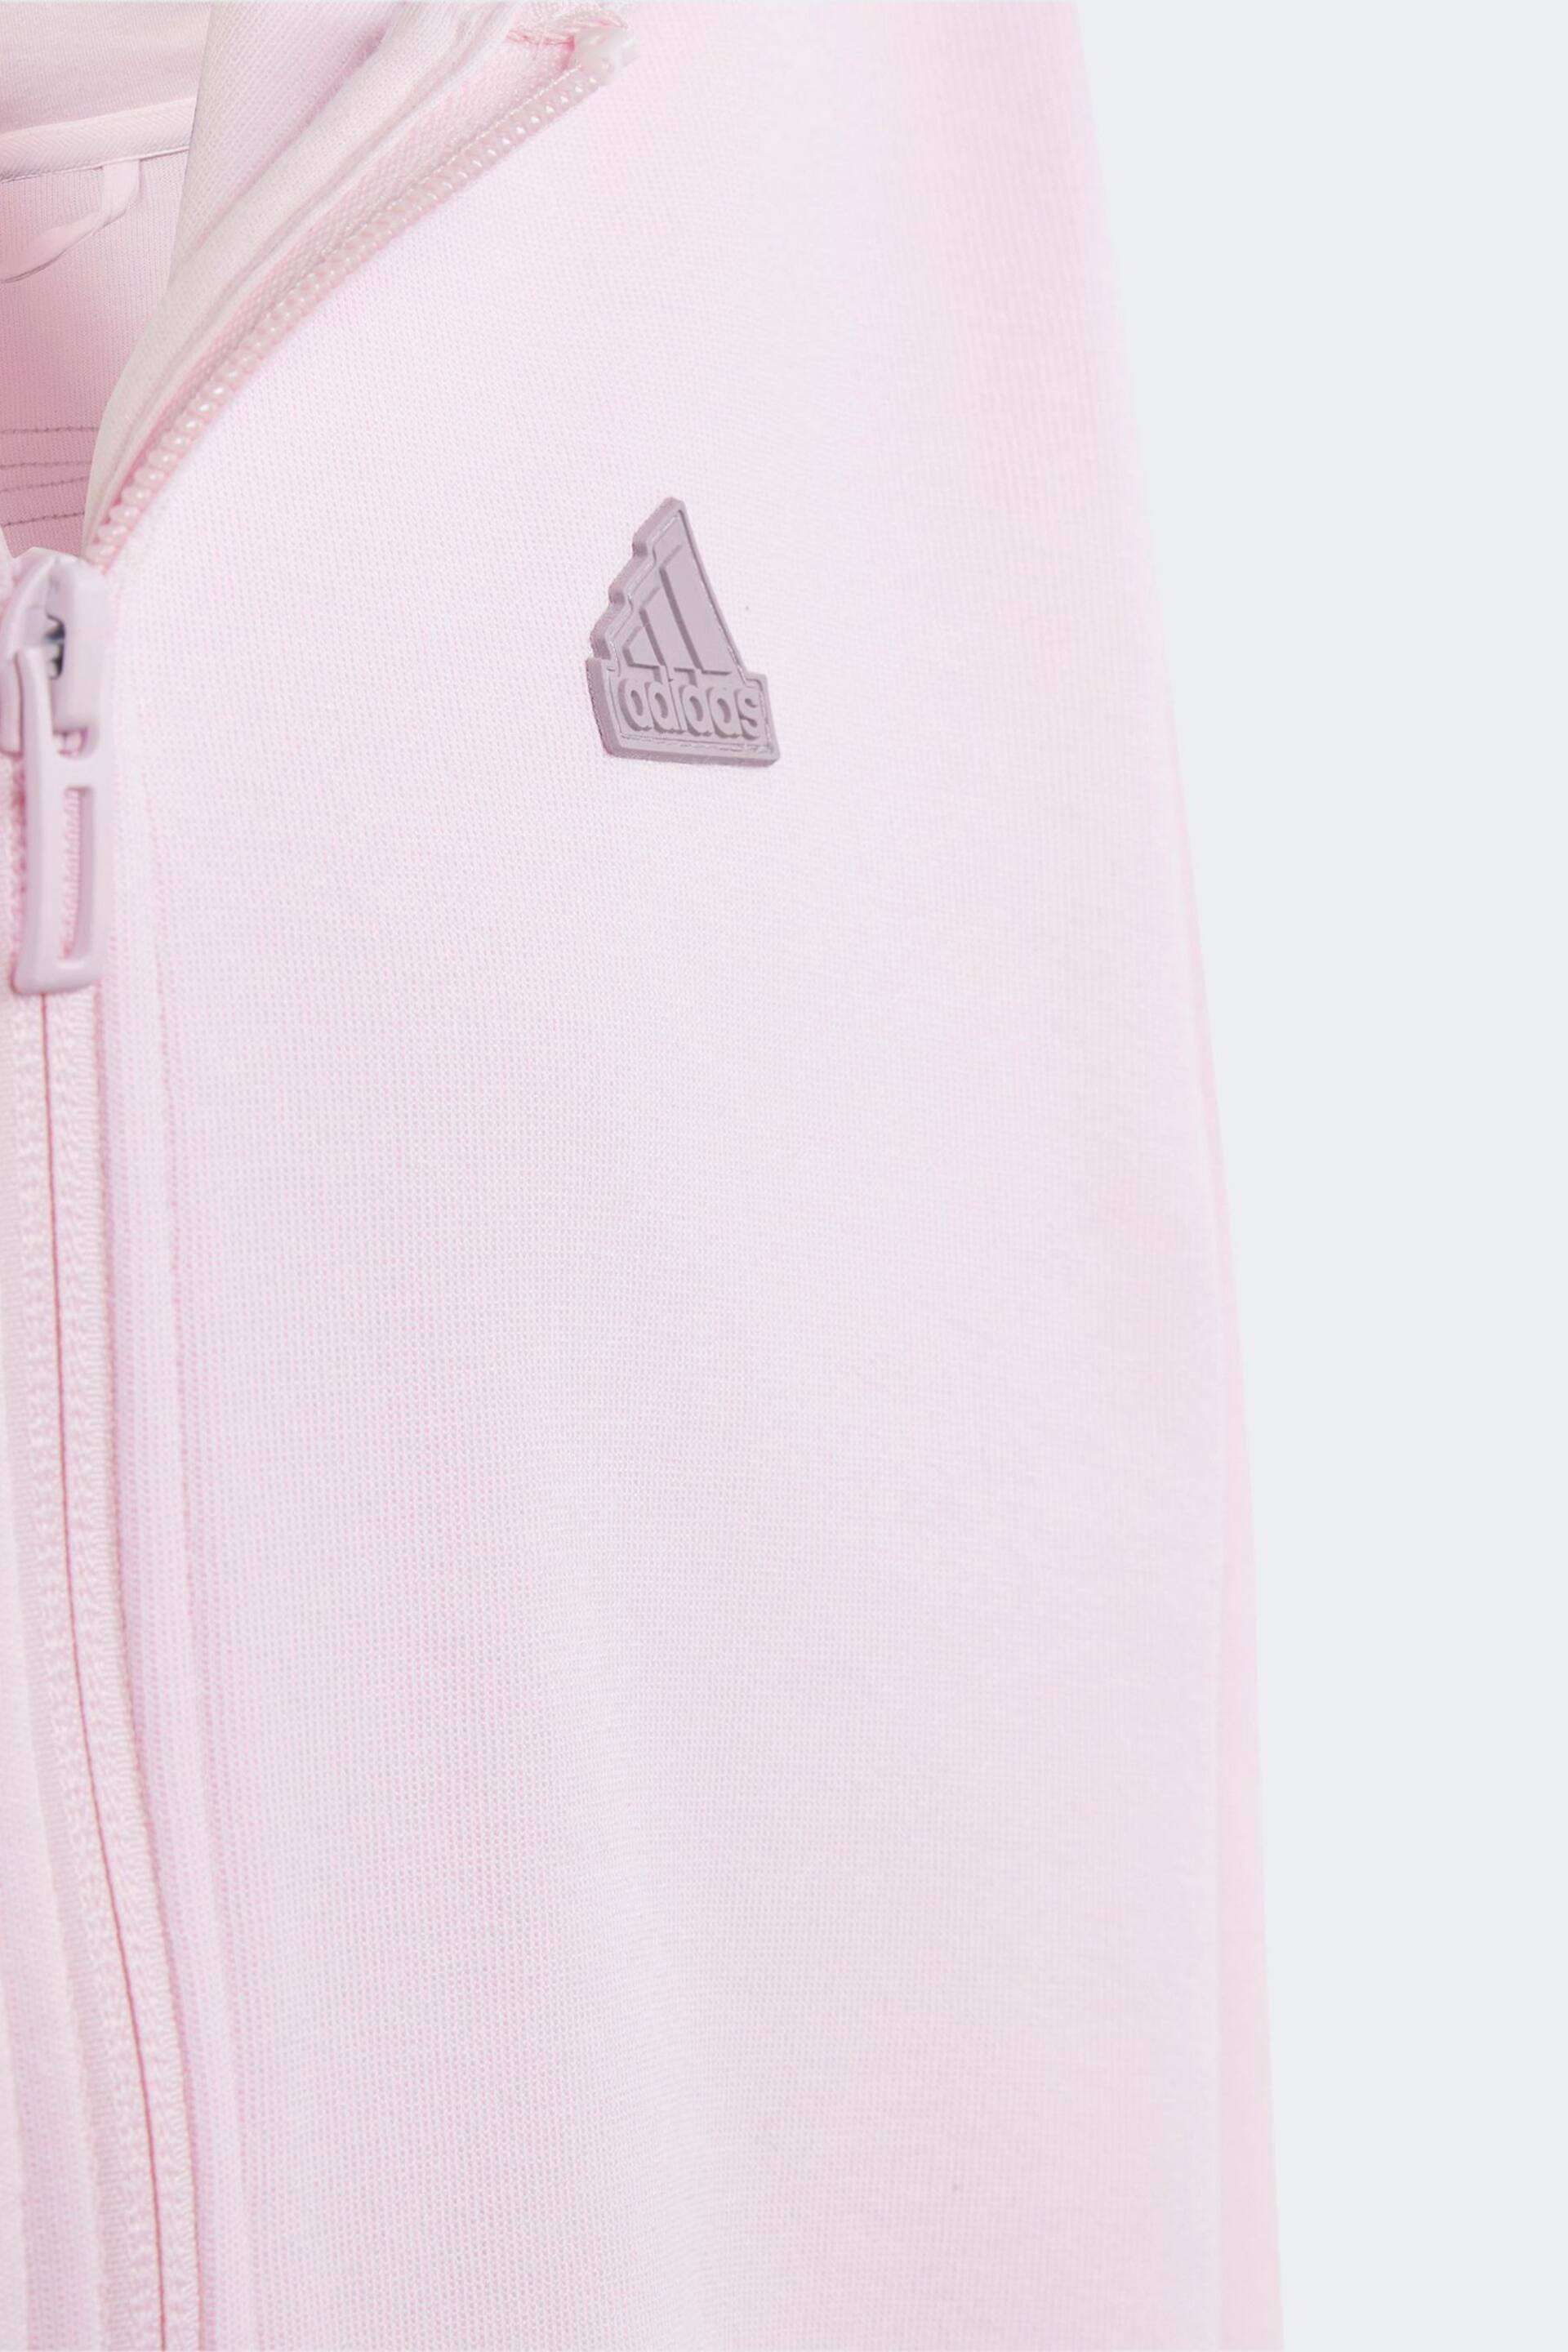 adidas Pink Sportswear Future Icons 3-Stripes Full-Zip Hoodie - Image 3 of 5